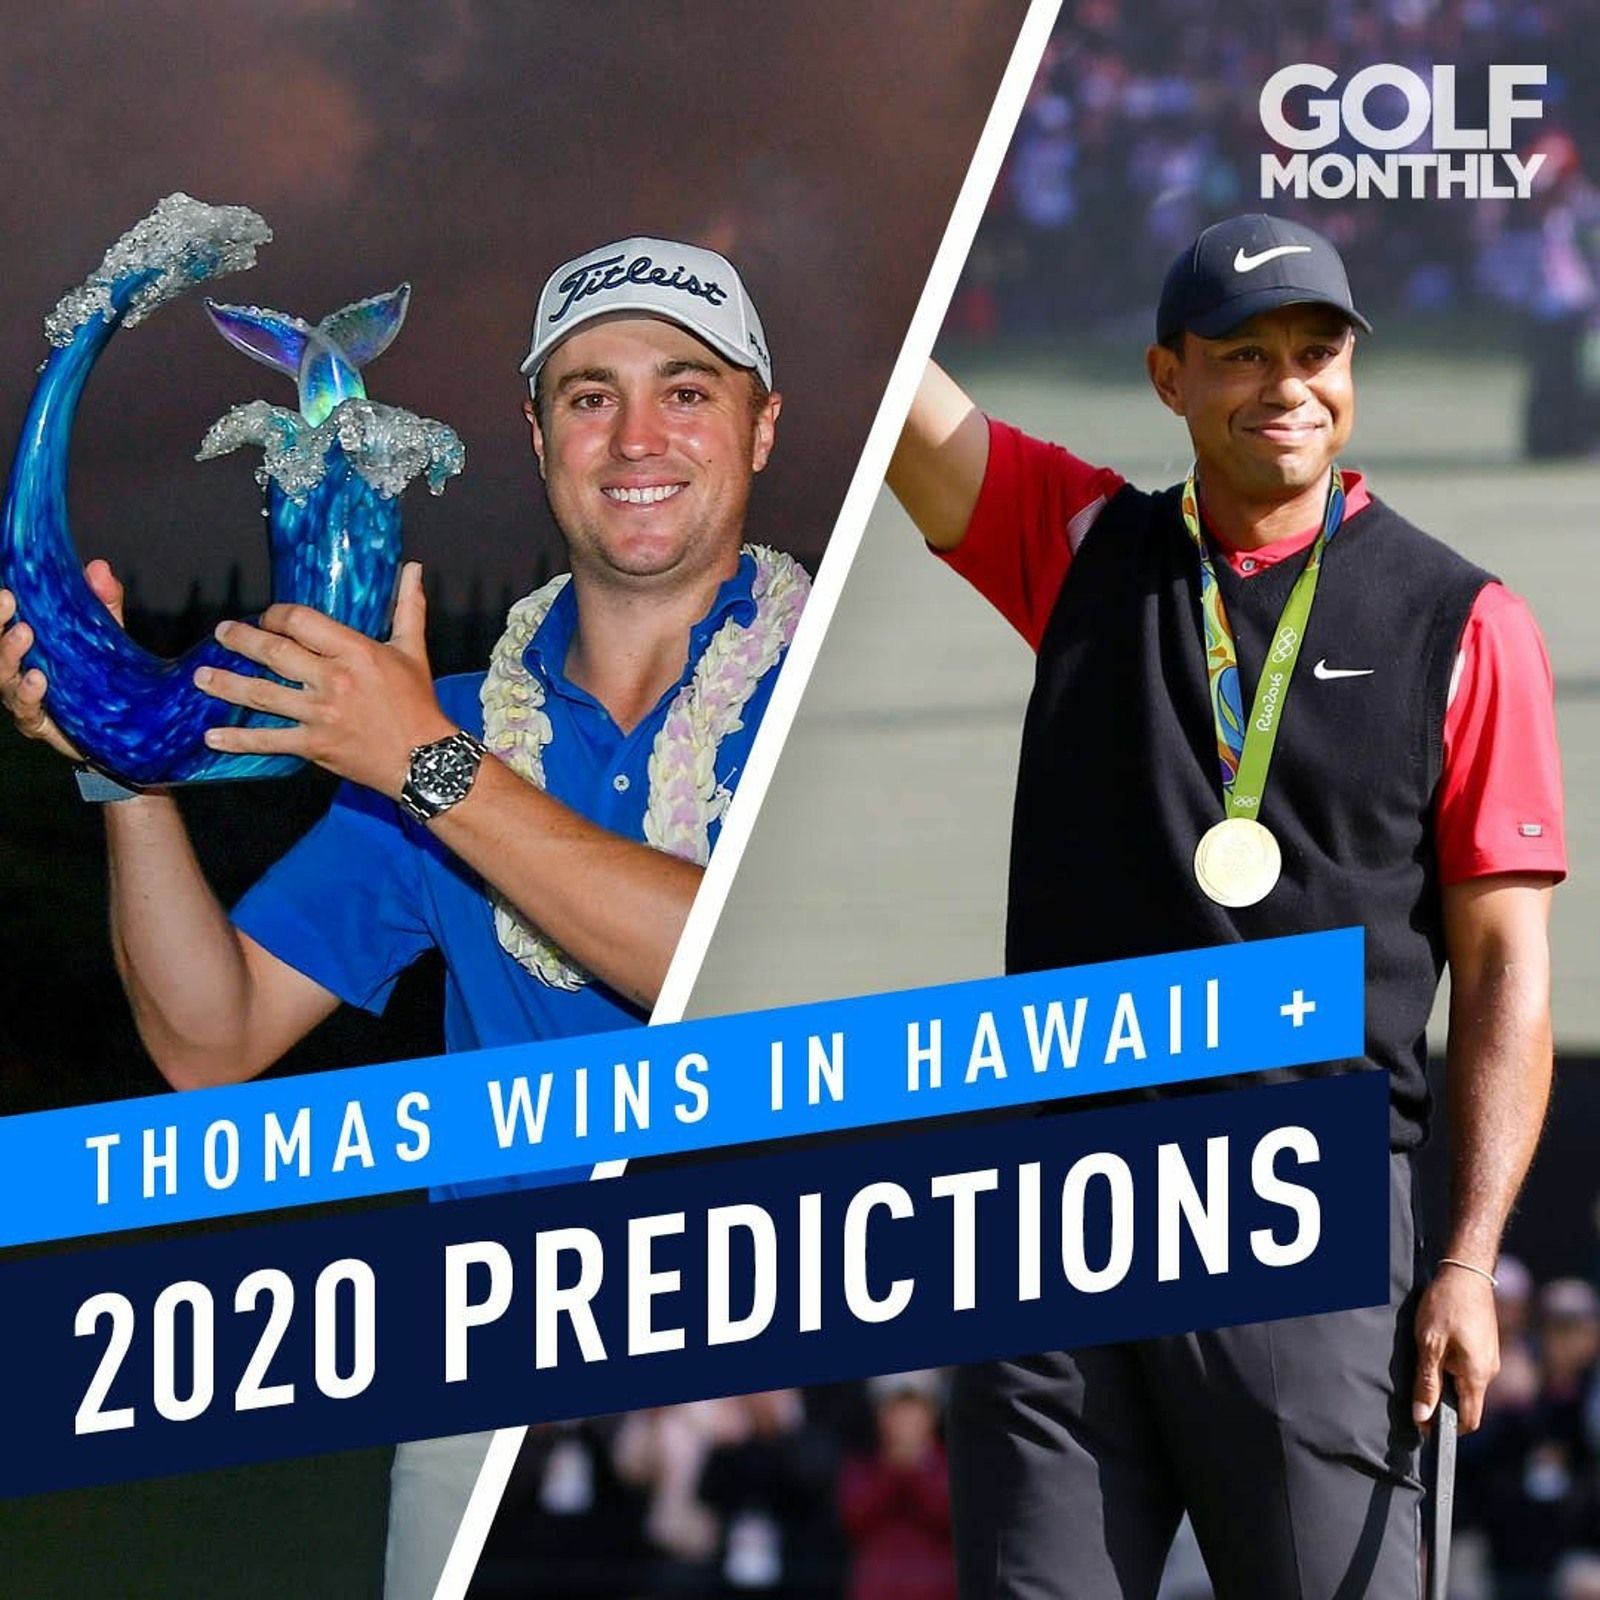 Thomas Wins In Hawaii + 2020 Predictions